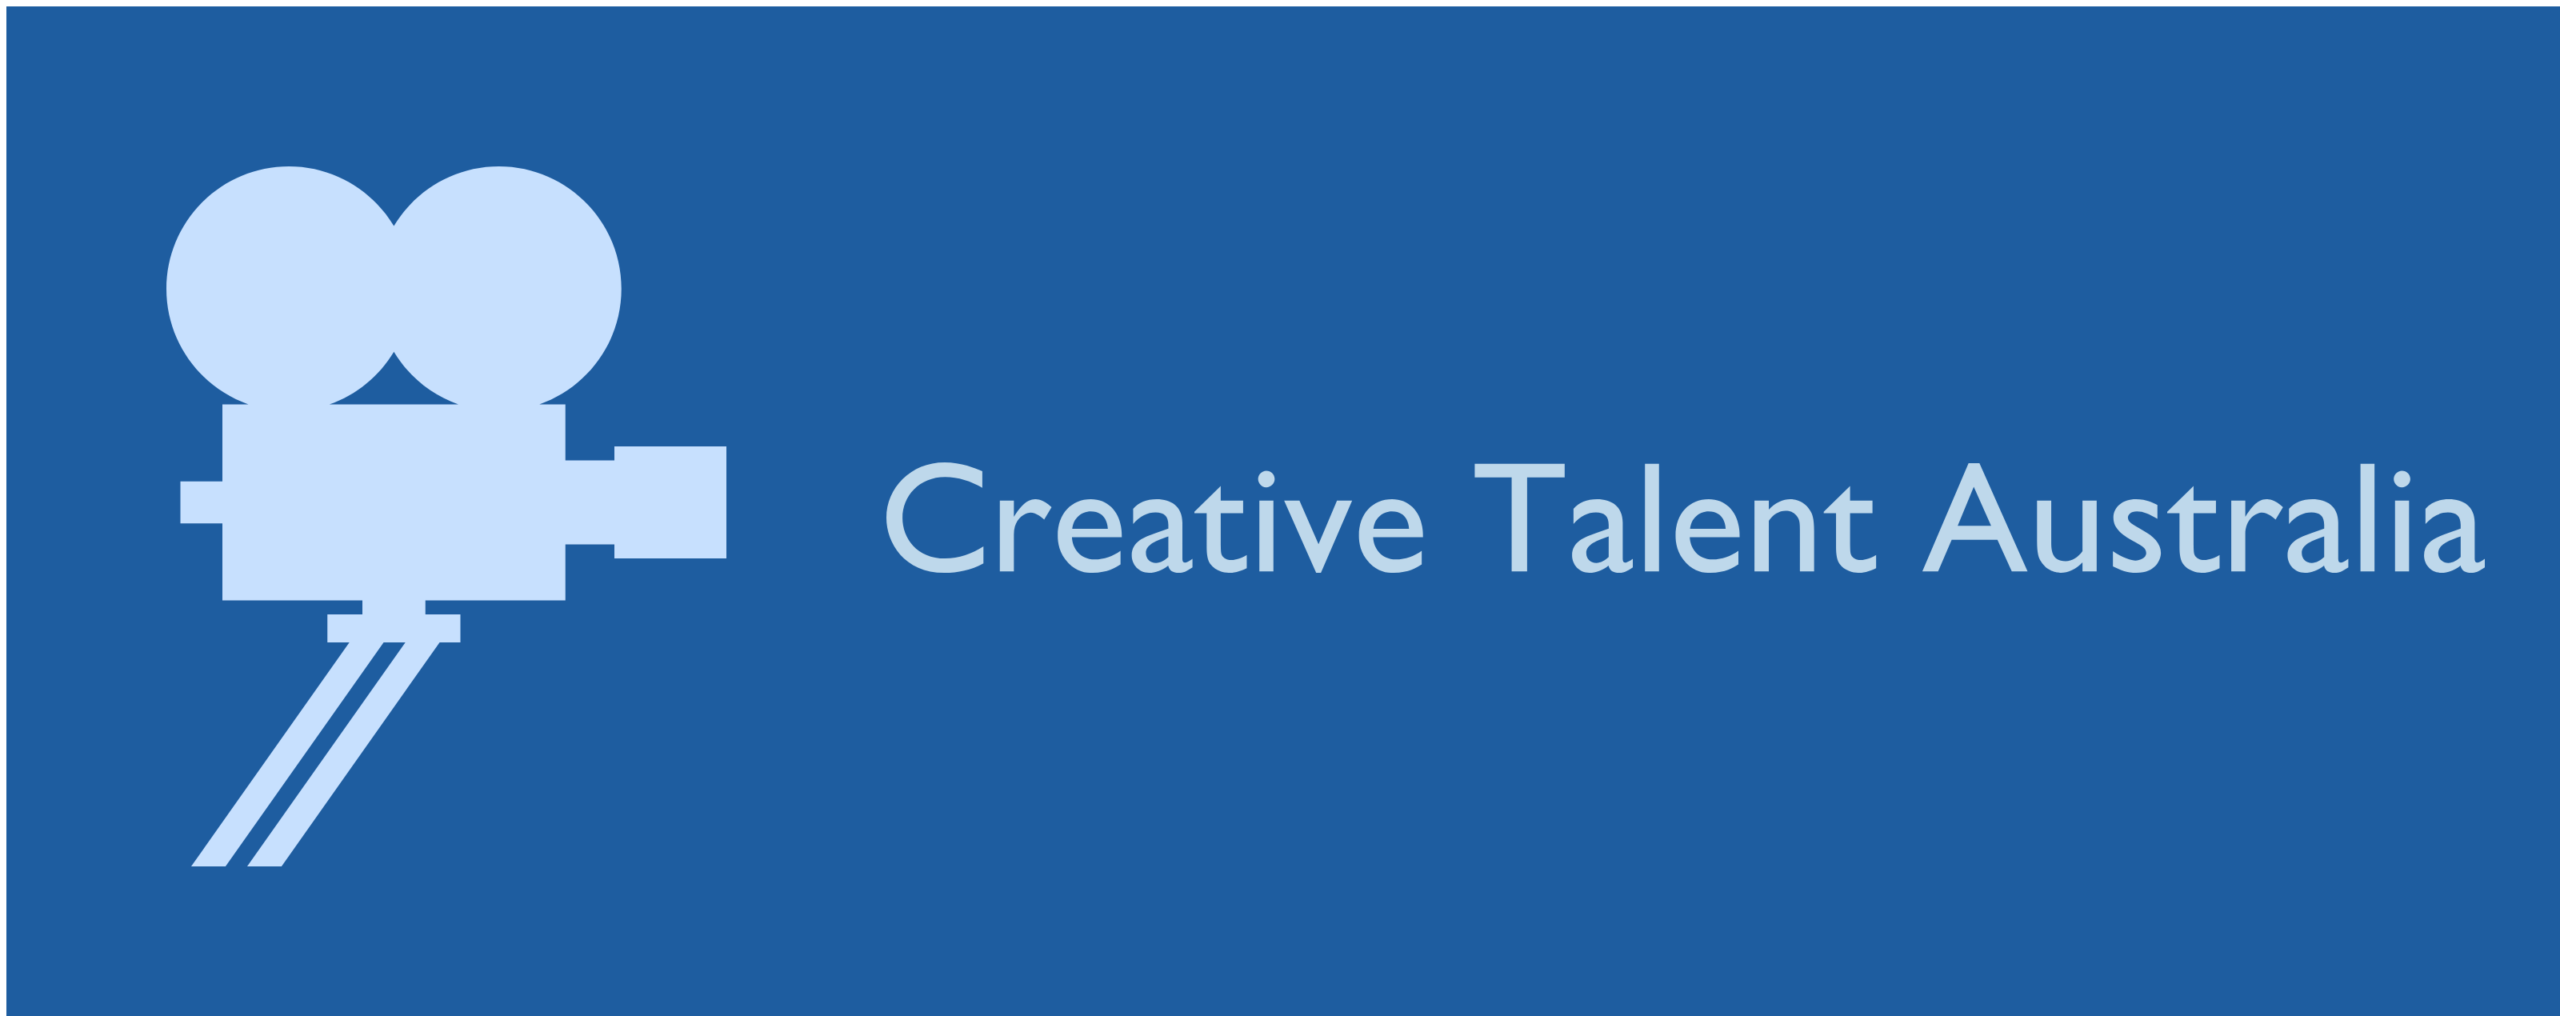 Creative Talent Australia